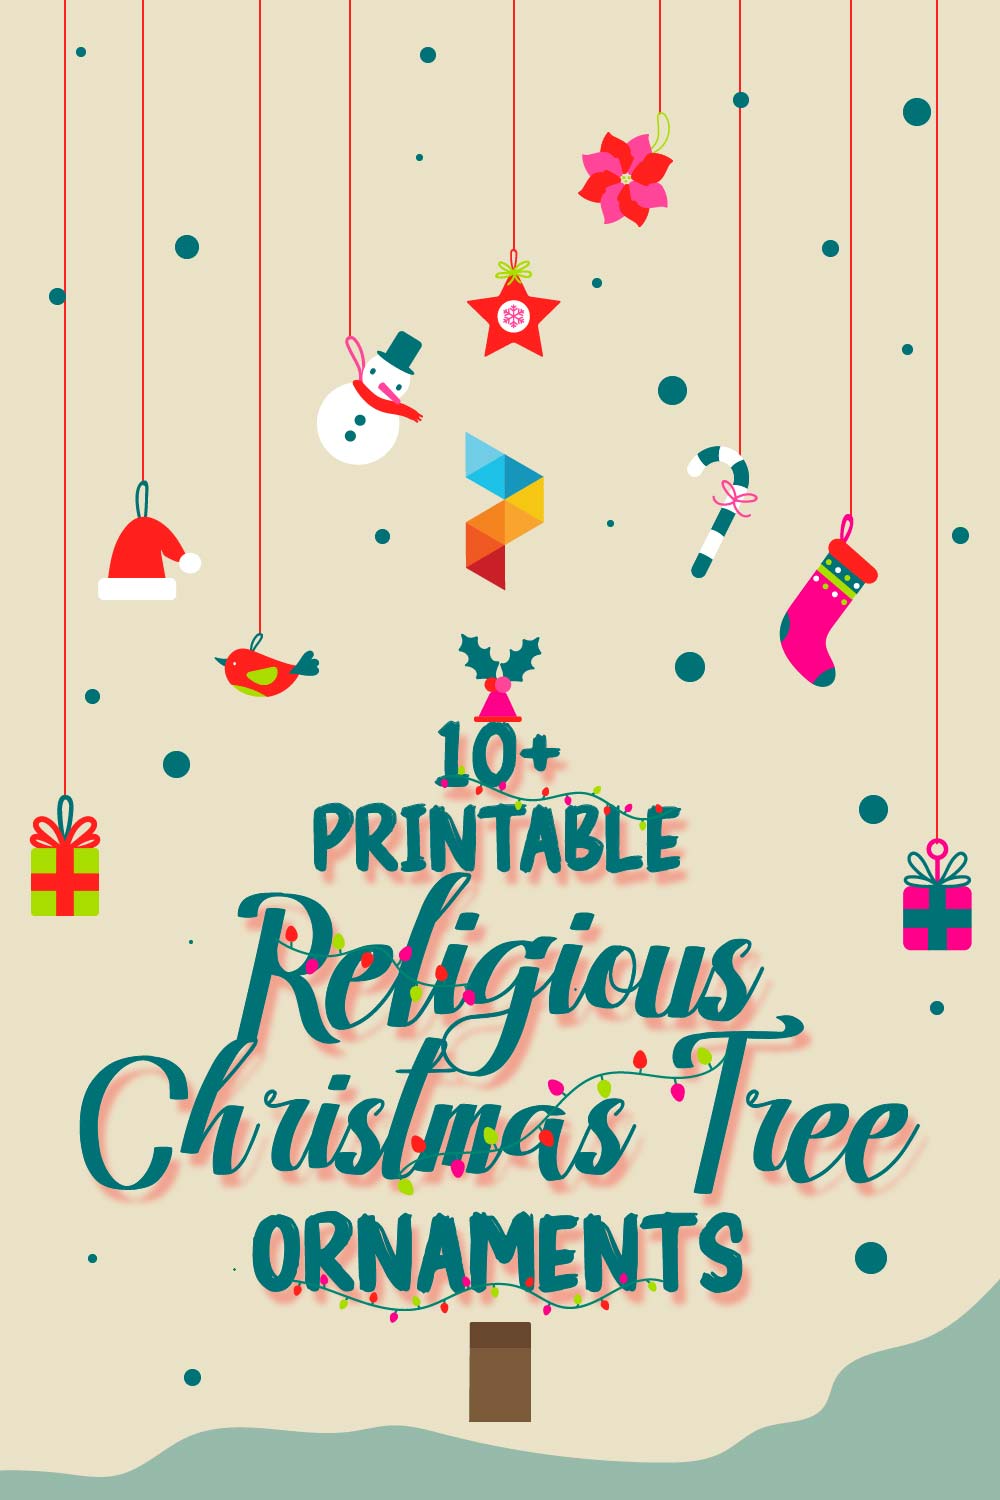 Printable Religious Christmas Tree Ornaments